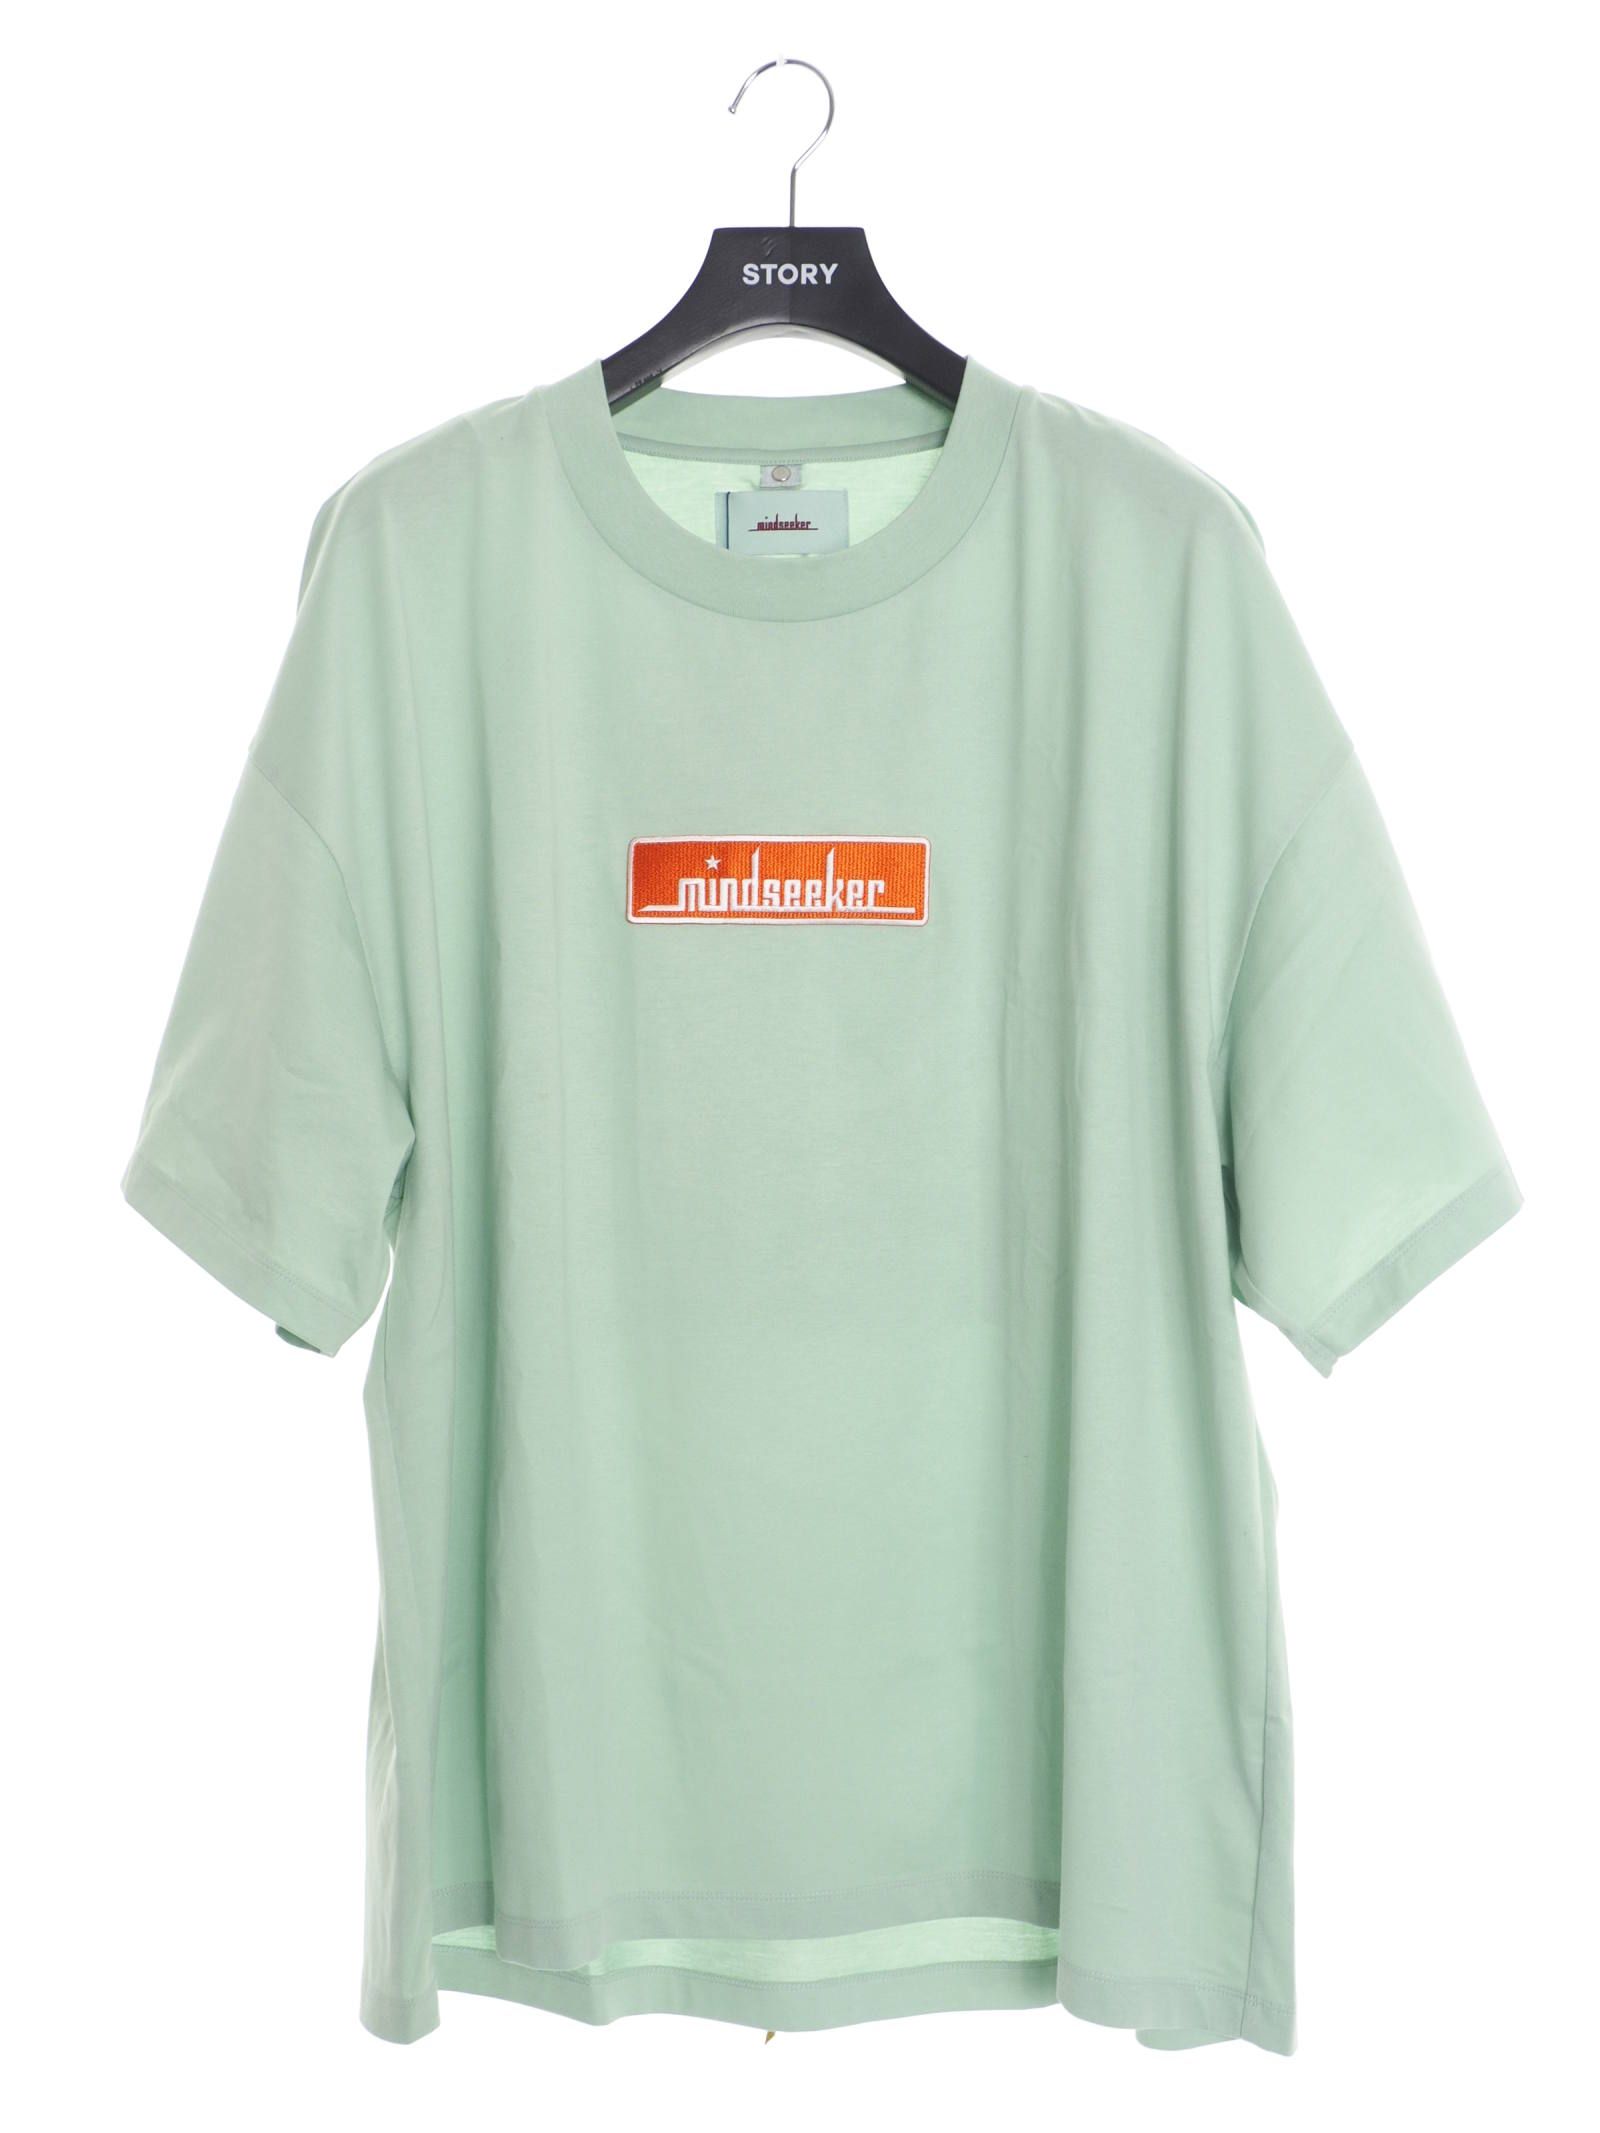 mindseeker - ボックスロゴ 半袖 Tシャツ Box Logo Short Sleeve Tee